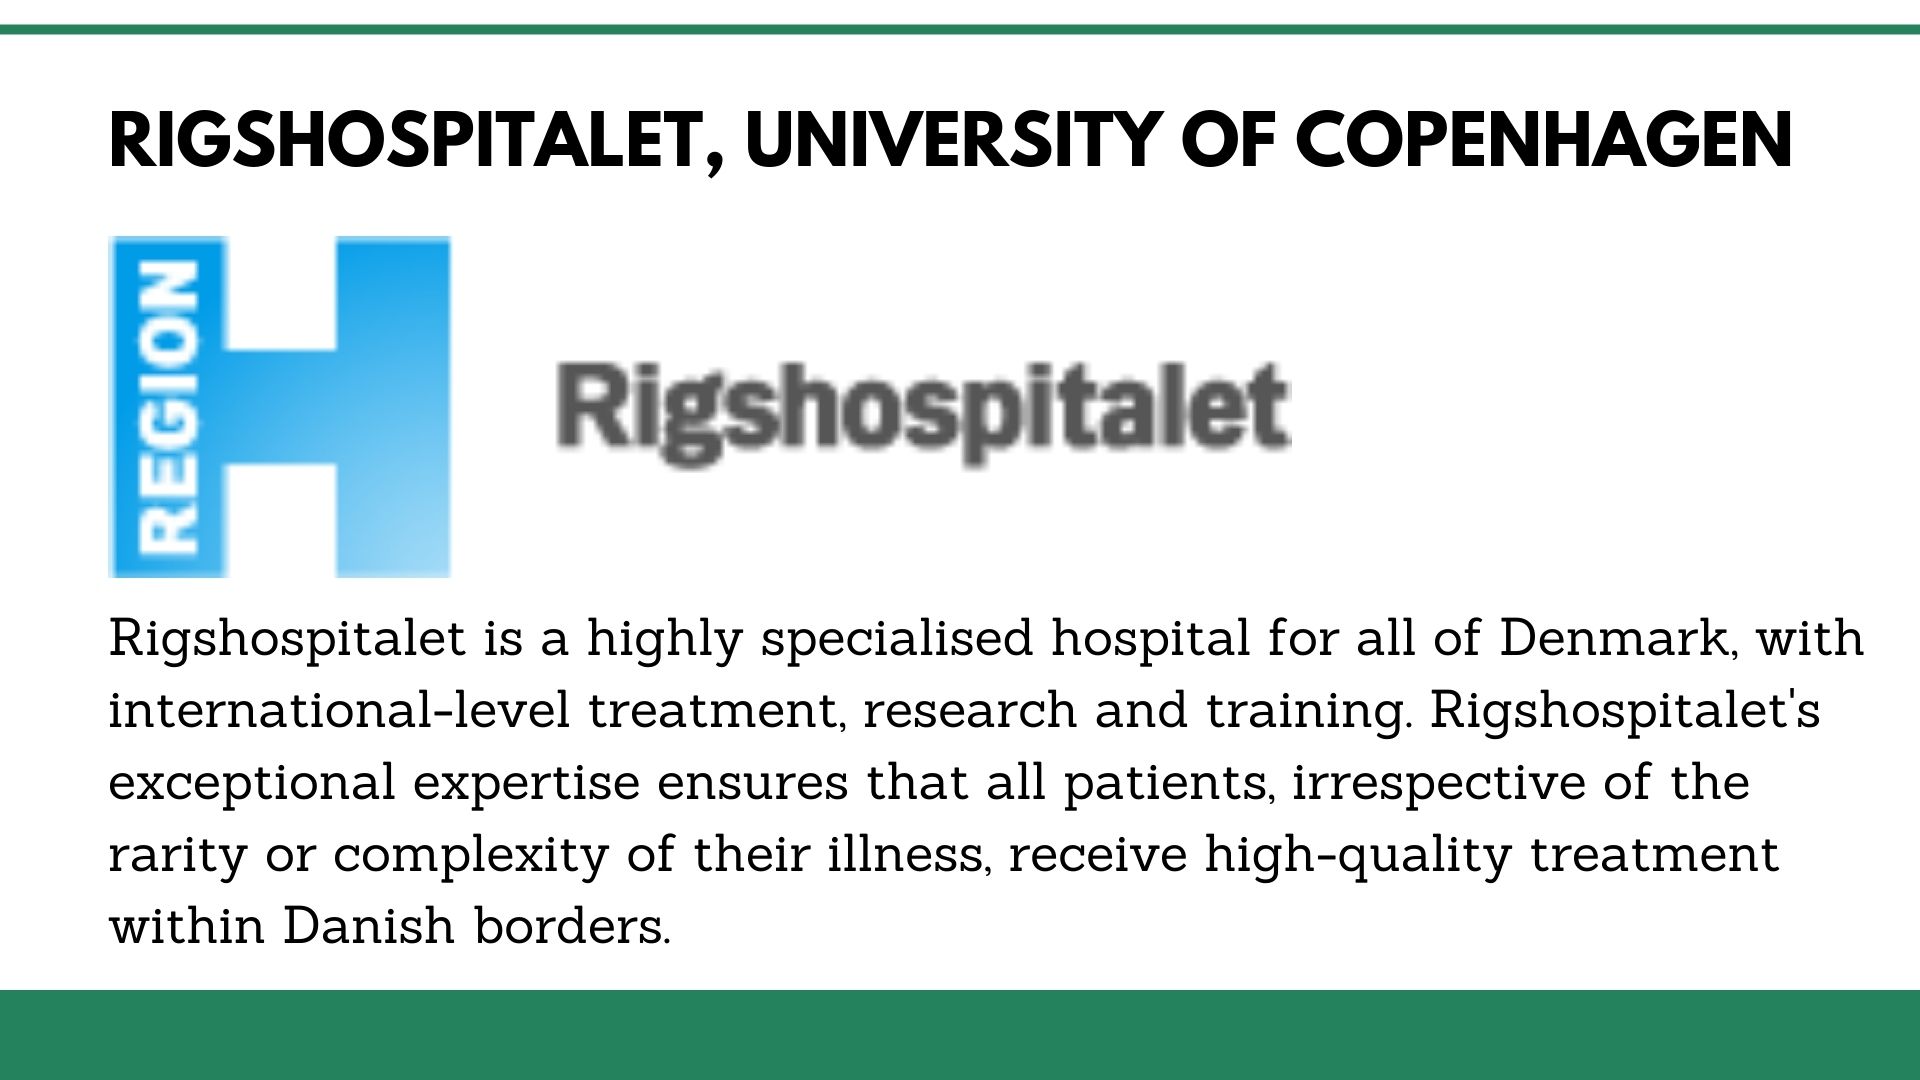 Rigshospitalet, University of Copenhagen